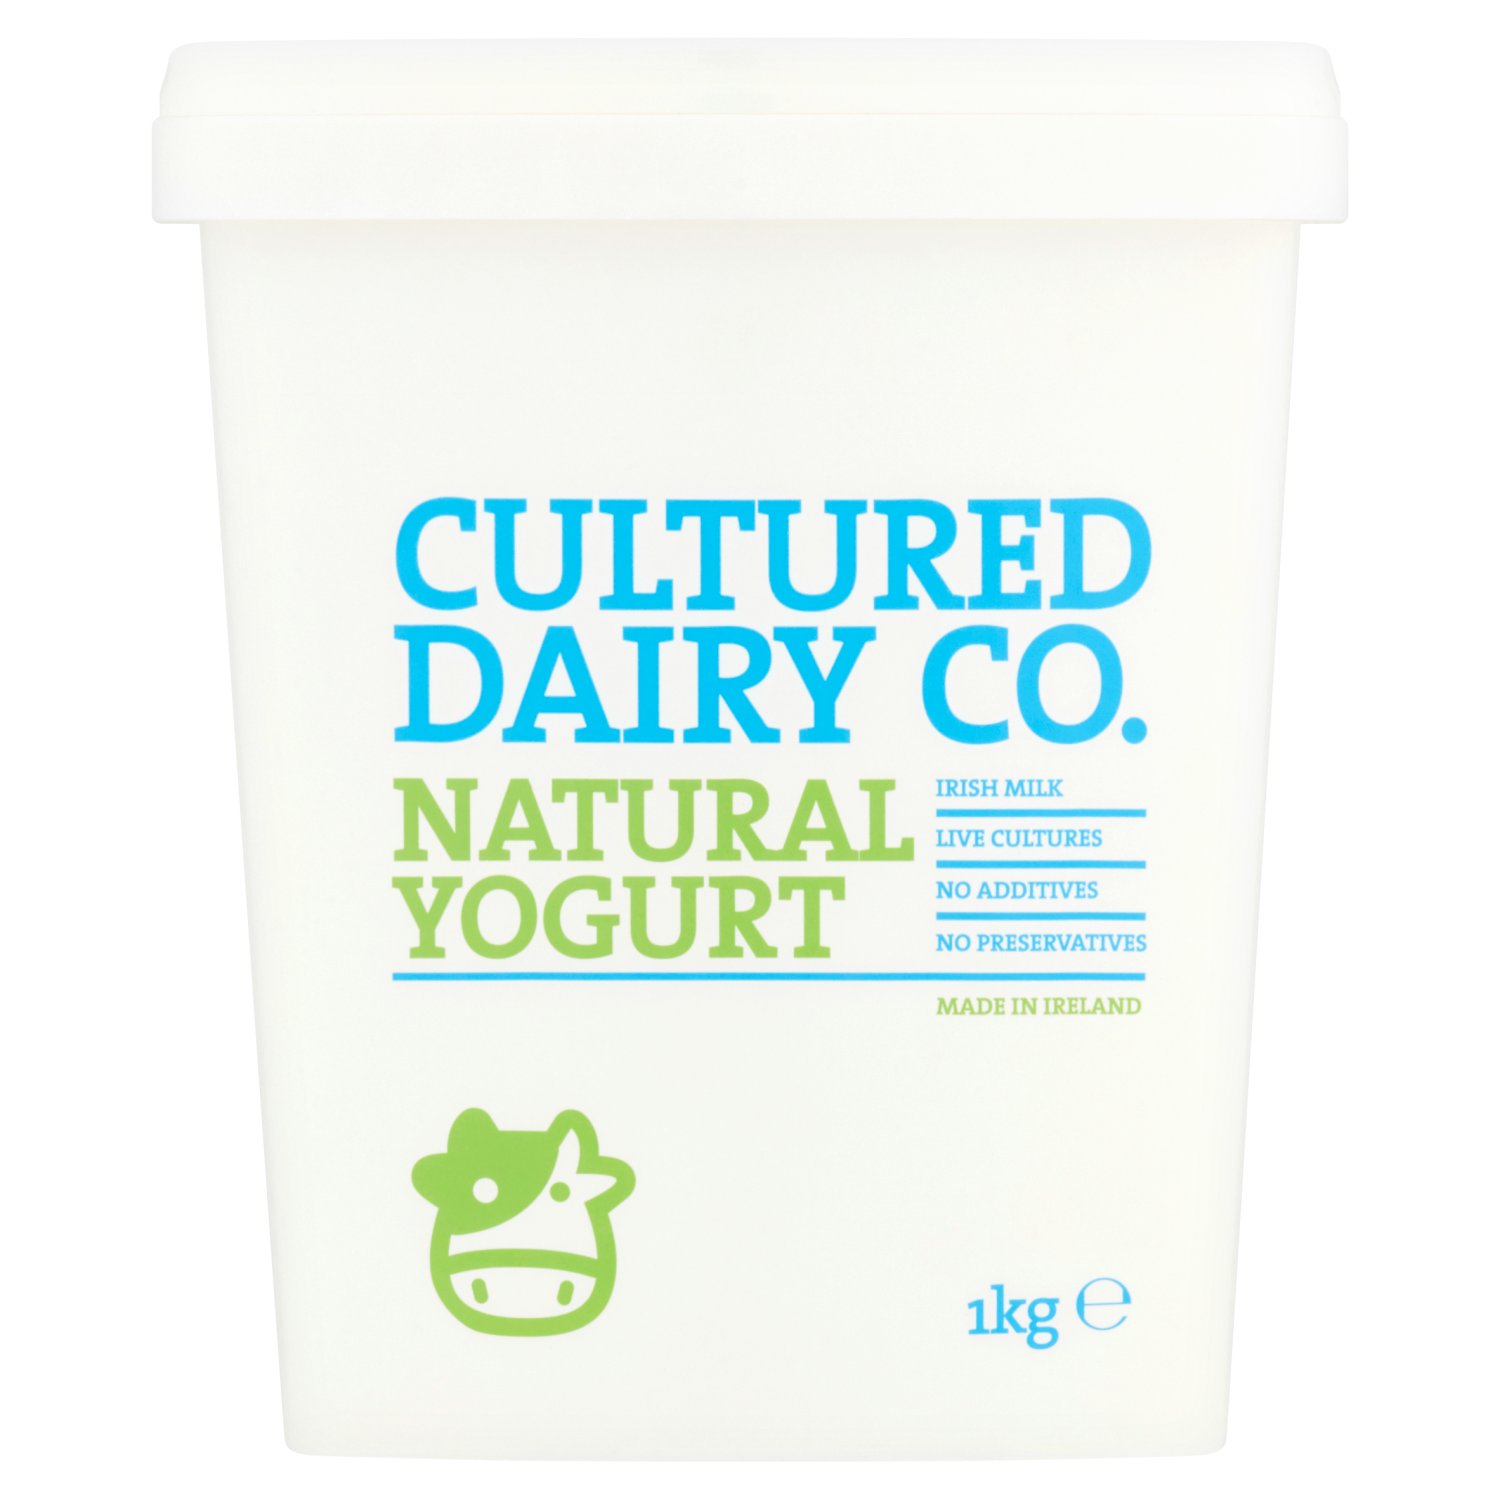 The Cultured Dairy Co Natural Yogurt (1 kg)